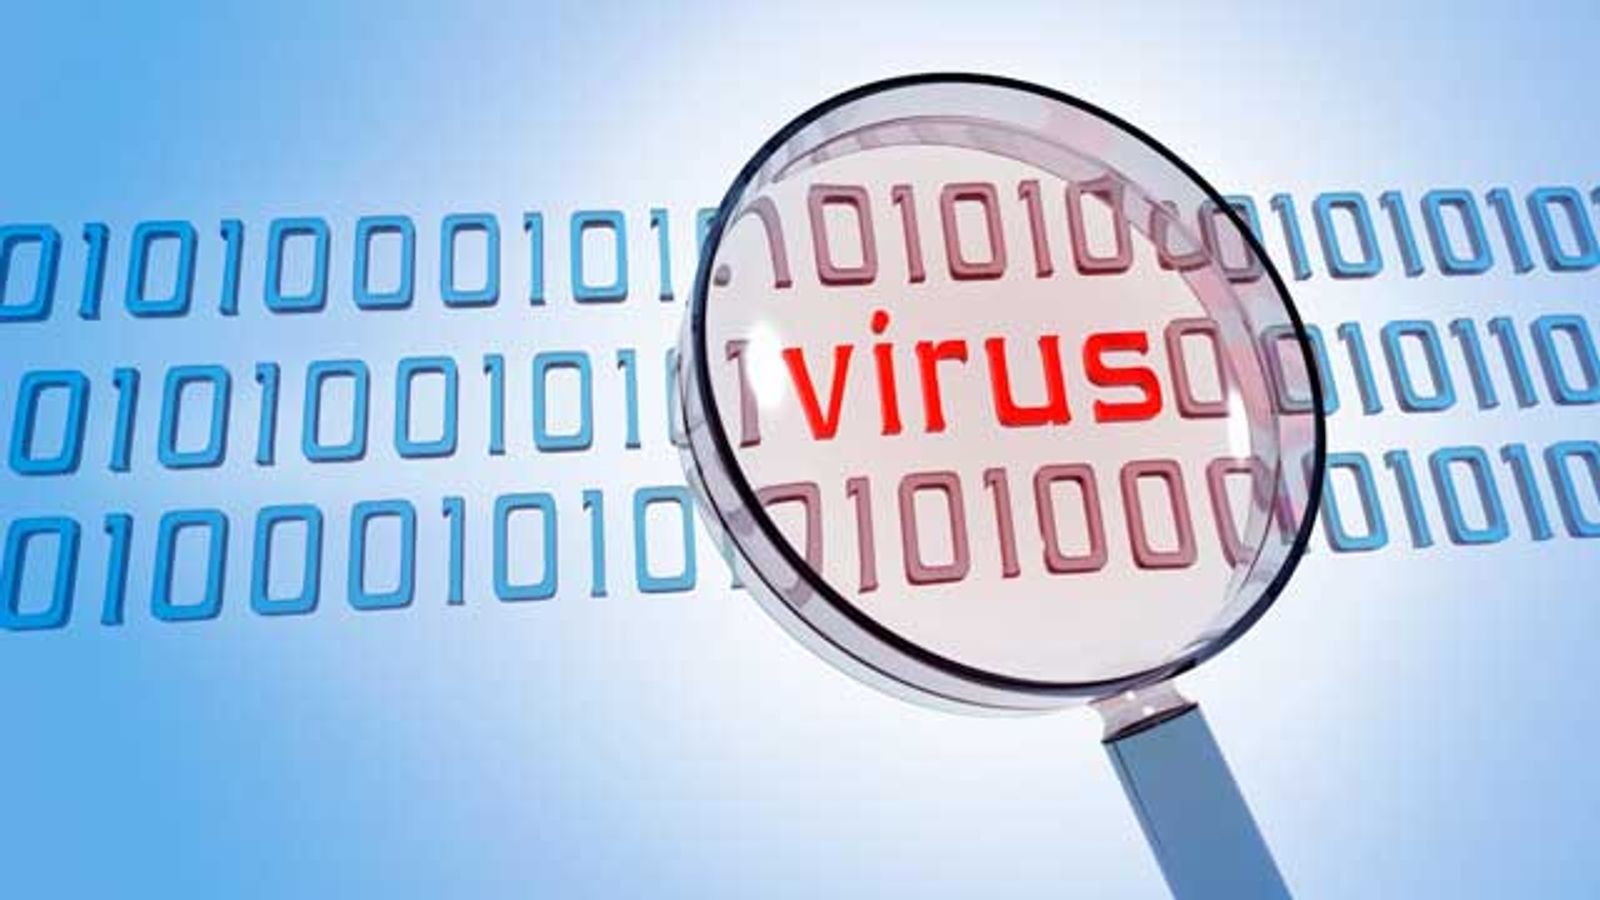 Porn Computer Virus Hits Washington, D.C. Television Station